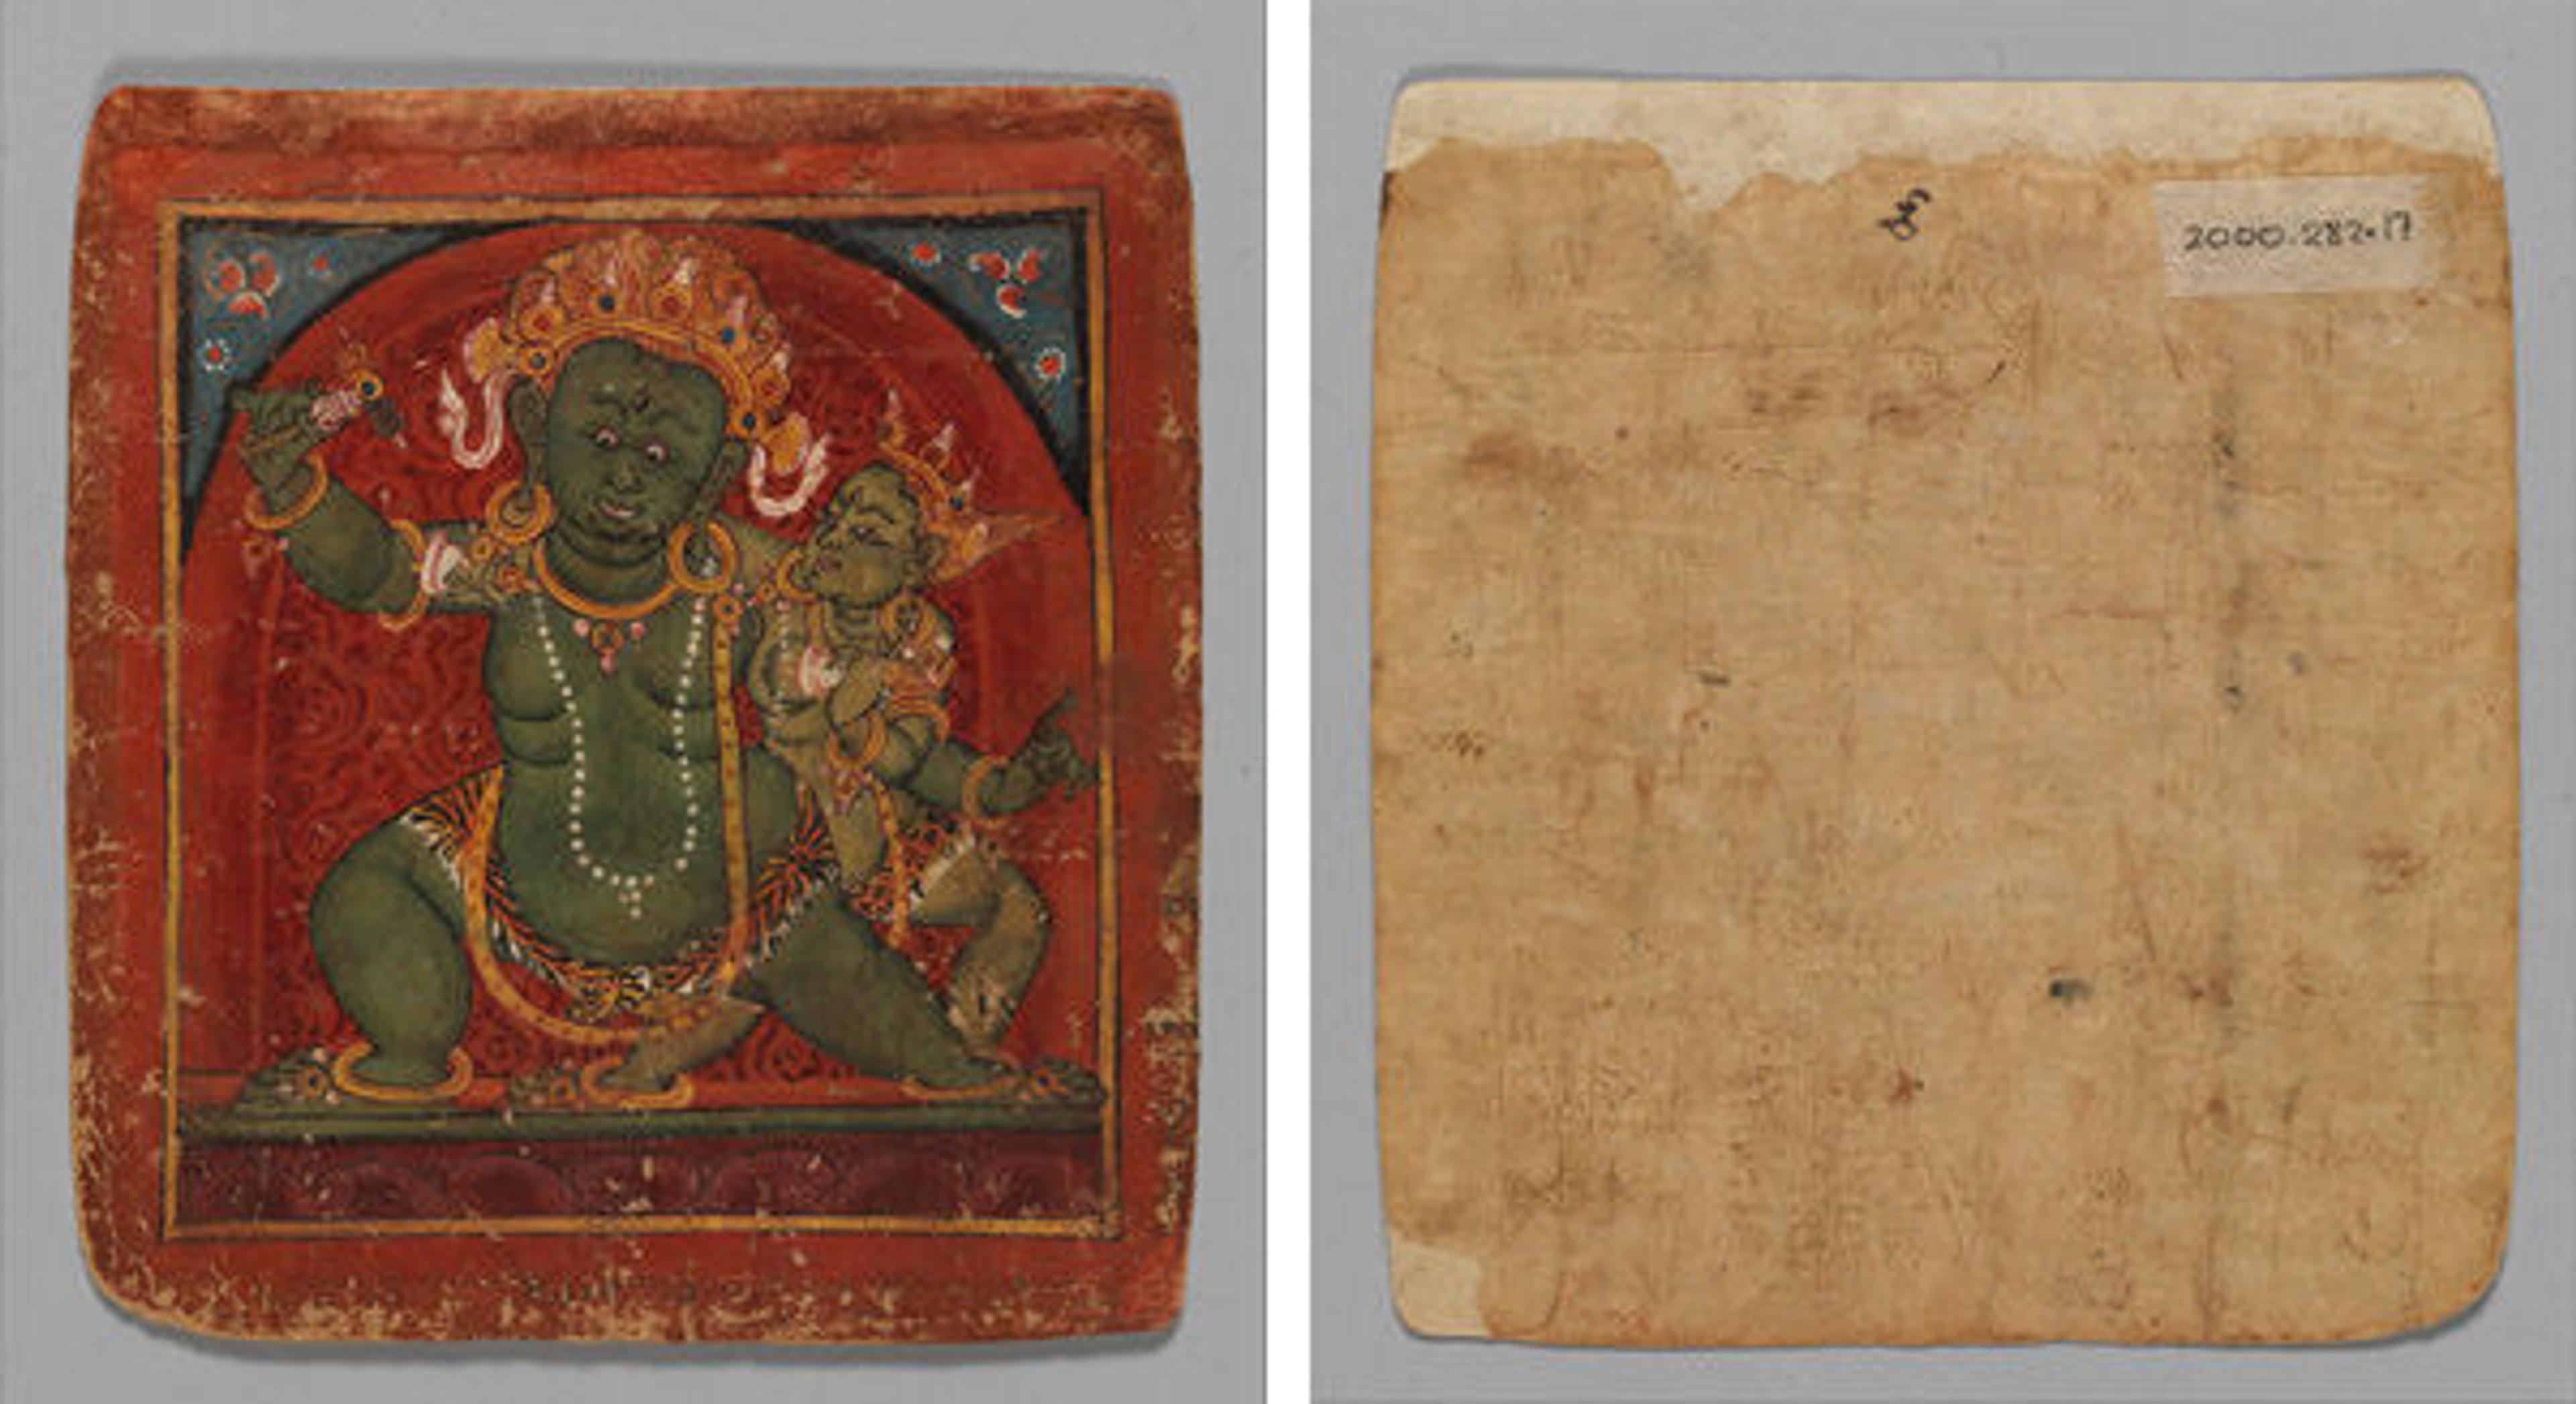 Initiation Card (Tsakalis), early 15th century. Tibet. 2000.282.17